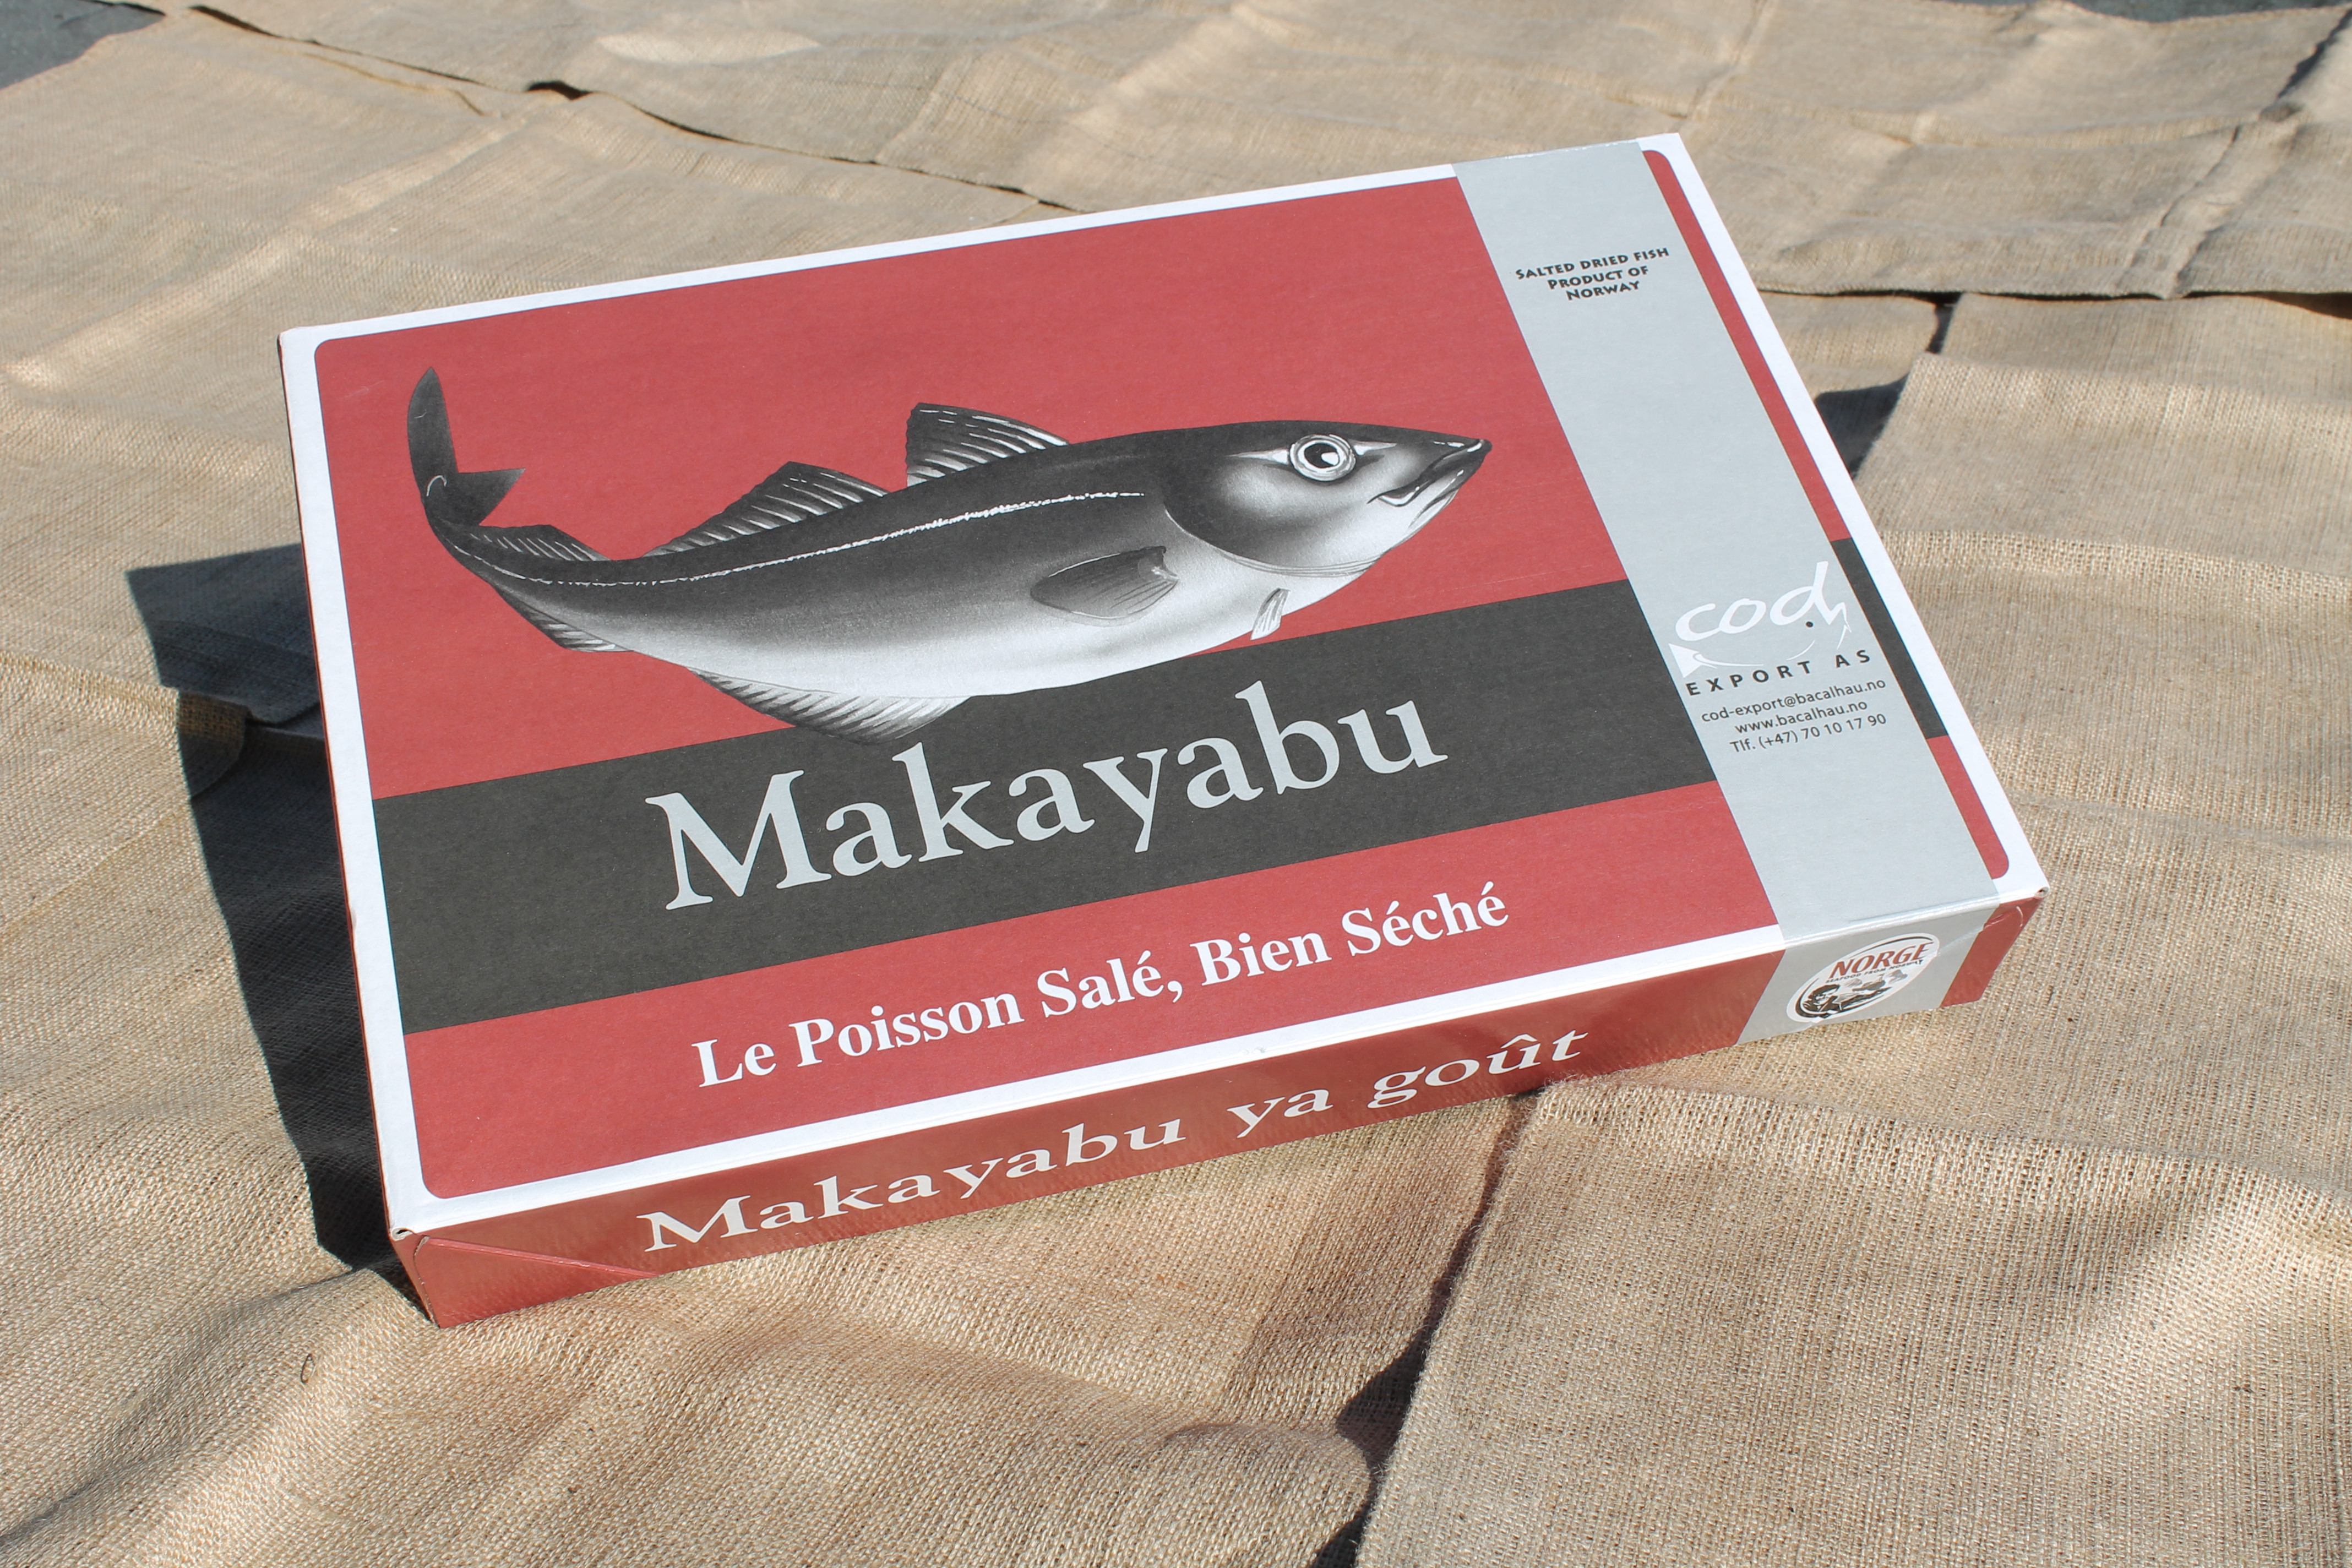 Makayabu 9 or 10 kgs Carton